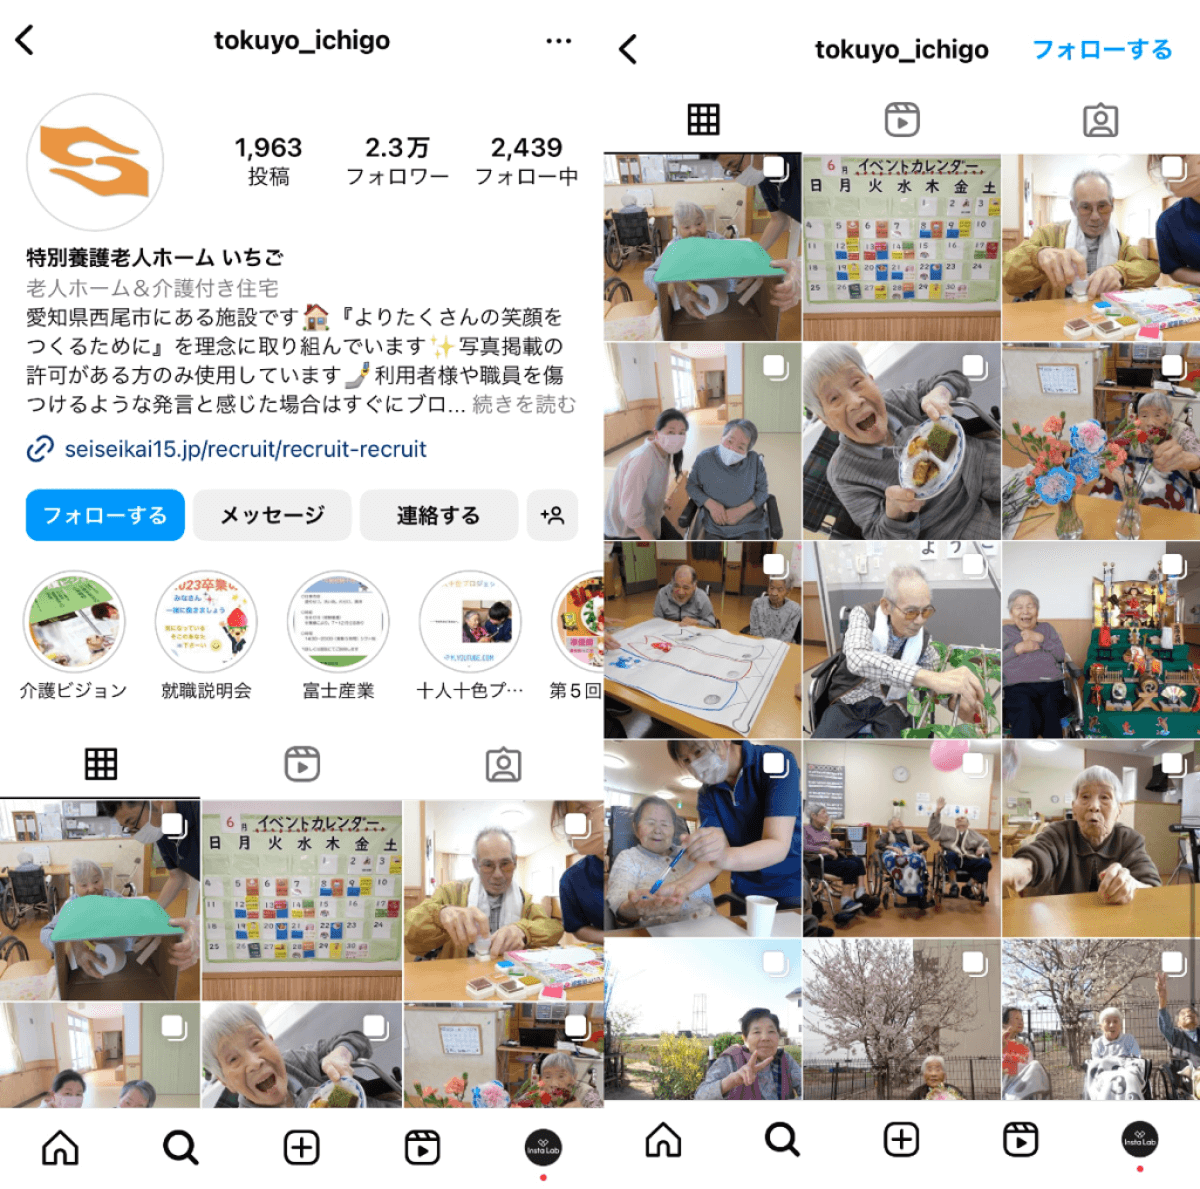 instagram-account-tokuyo-ichigo